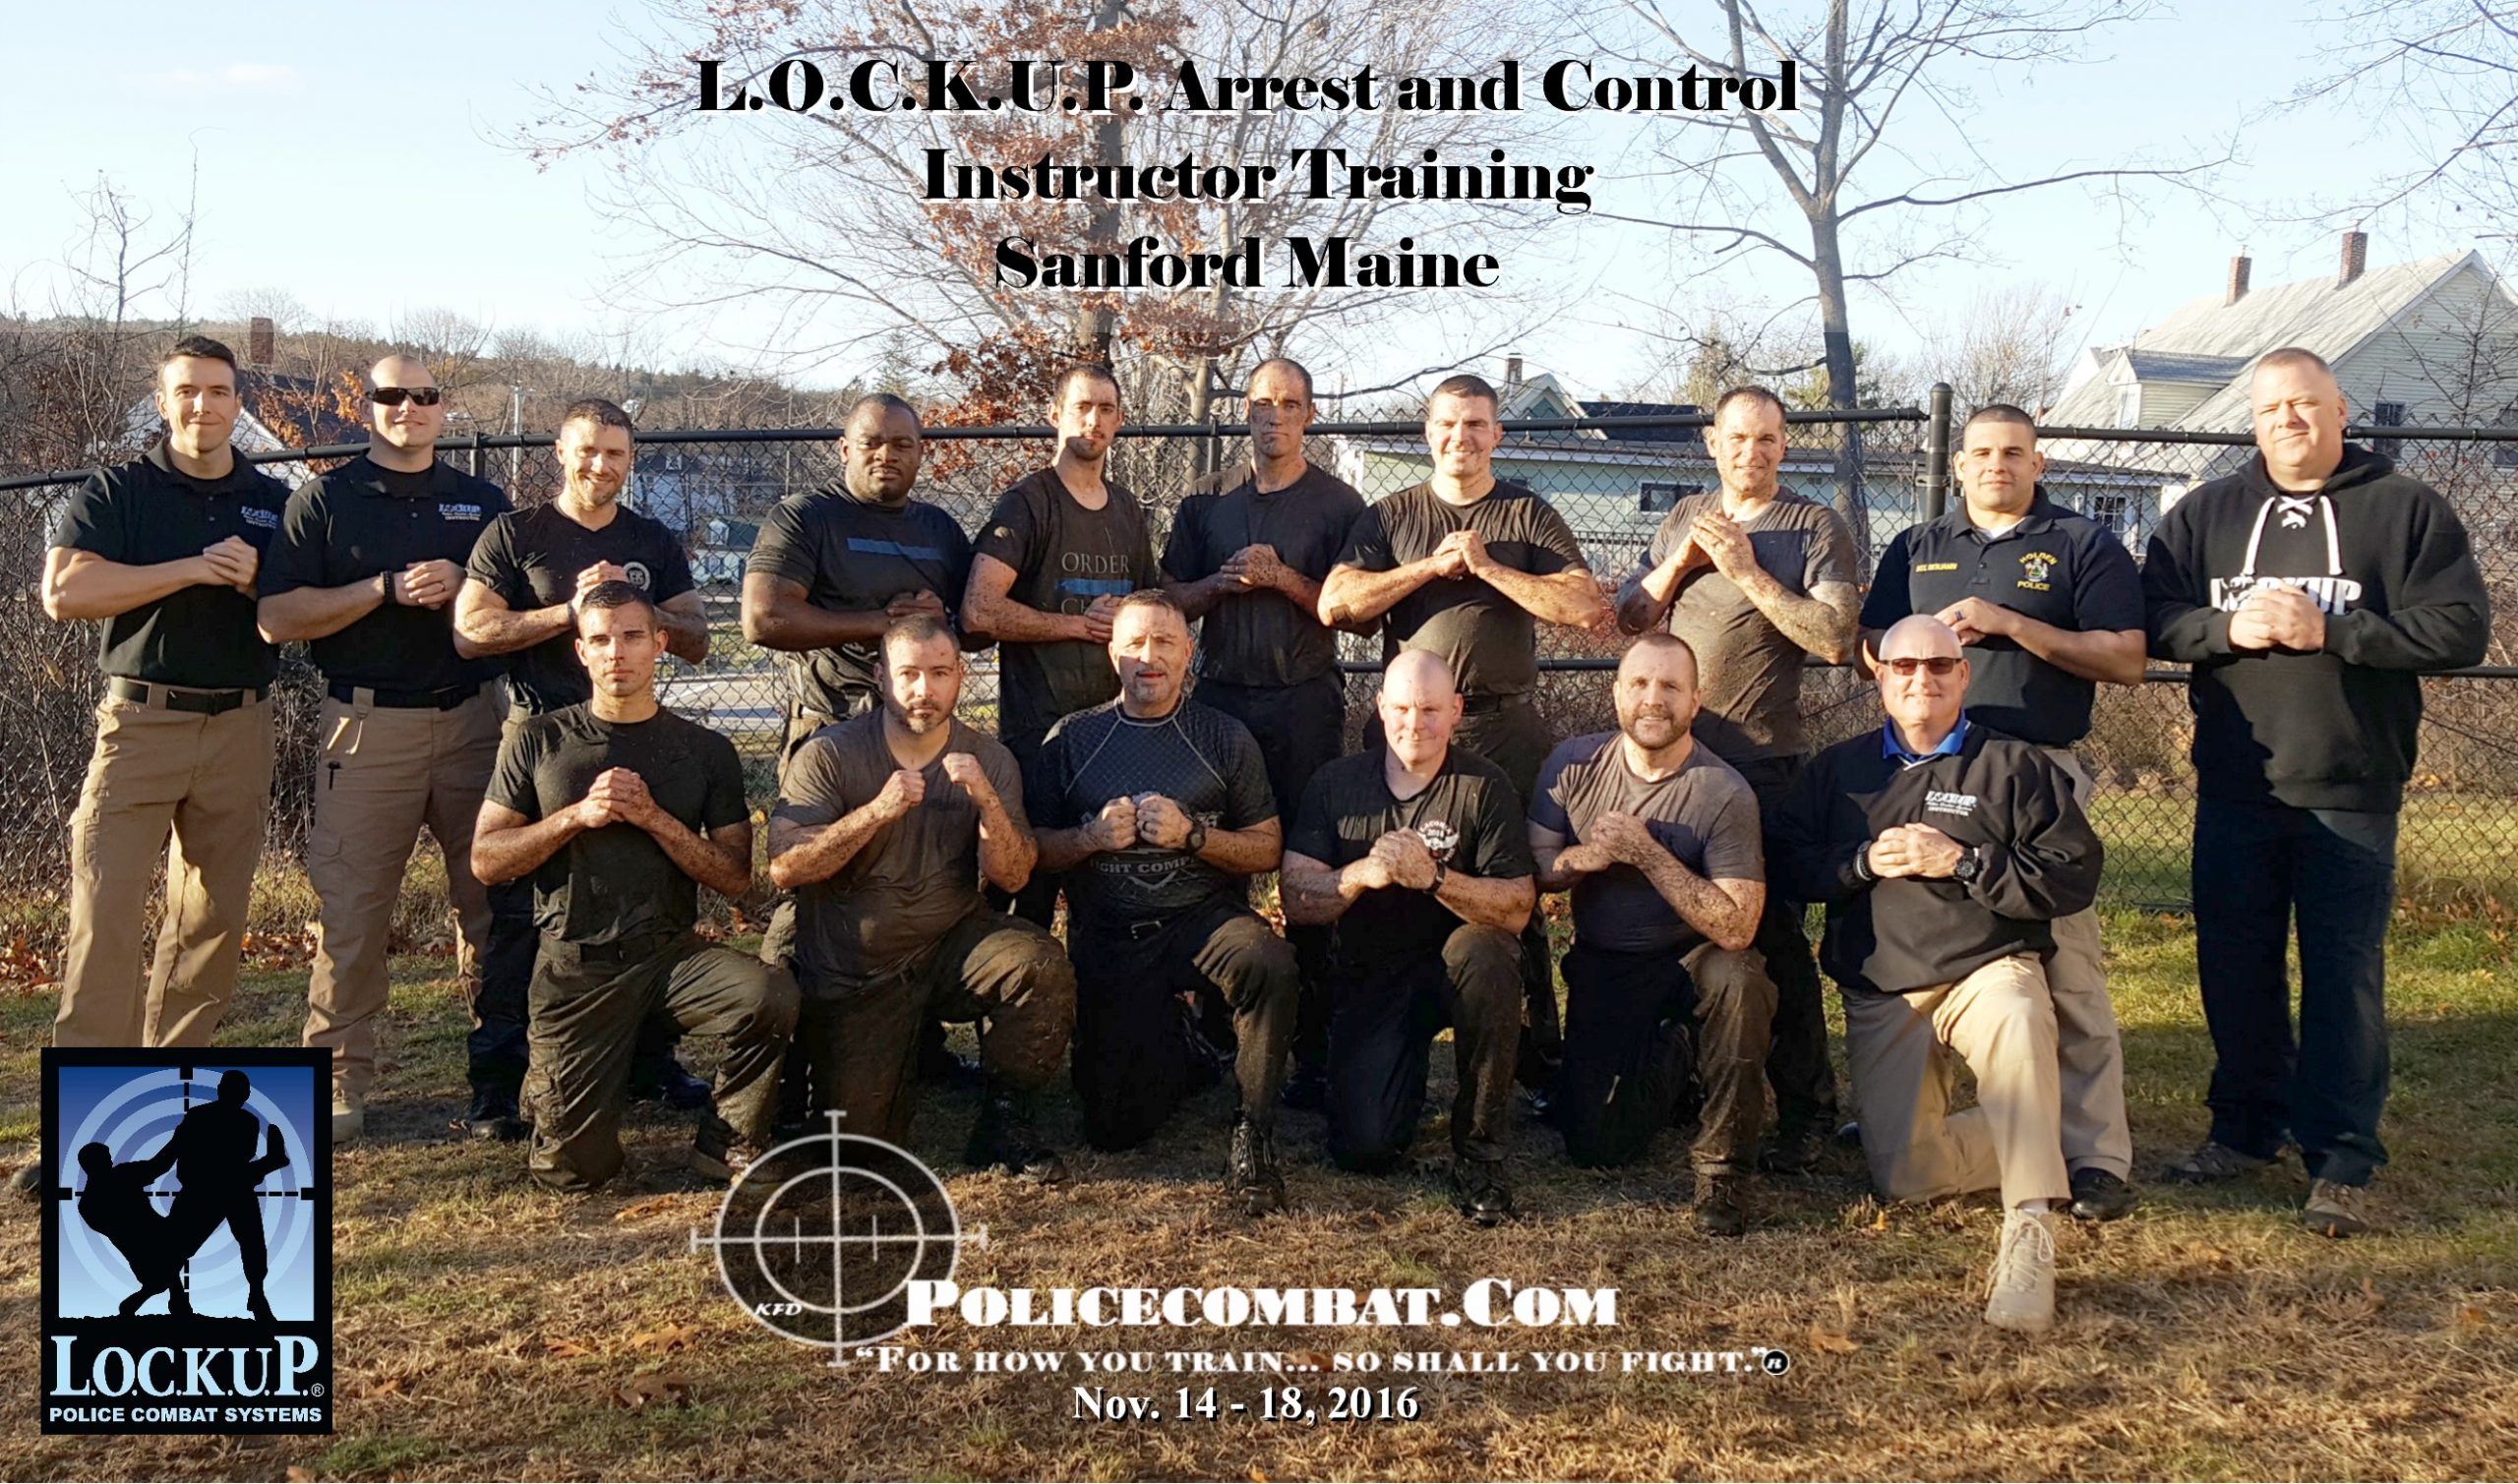 Sanford Maine – L.O.C.K.U.P. ® Arrest And Control Instructor Training